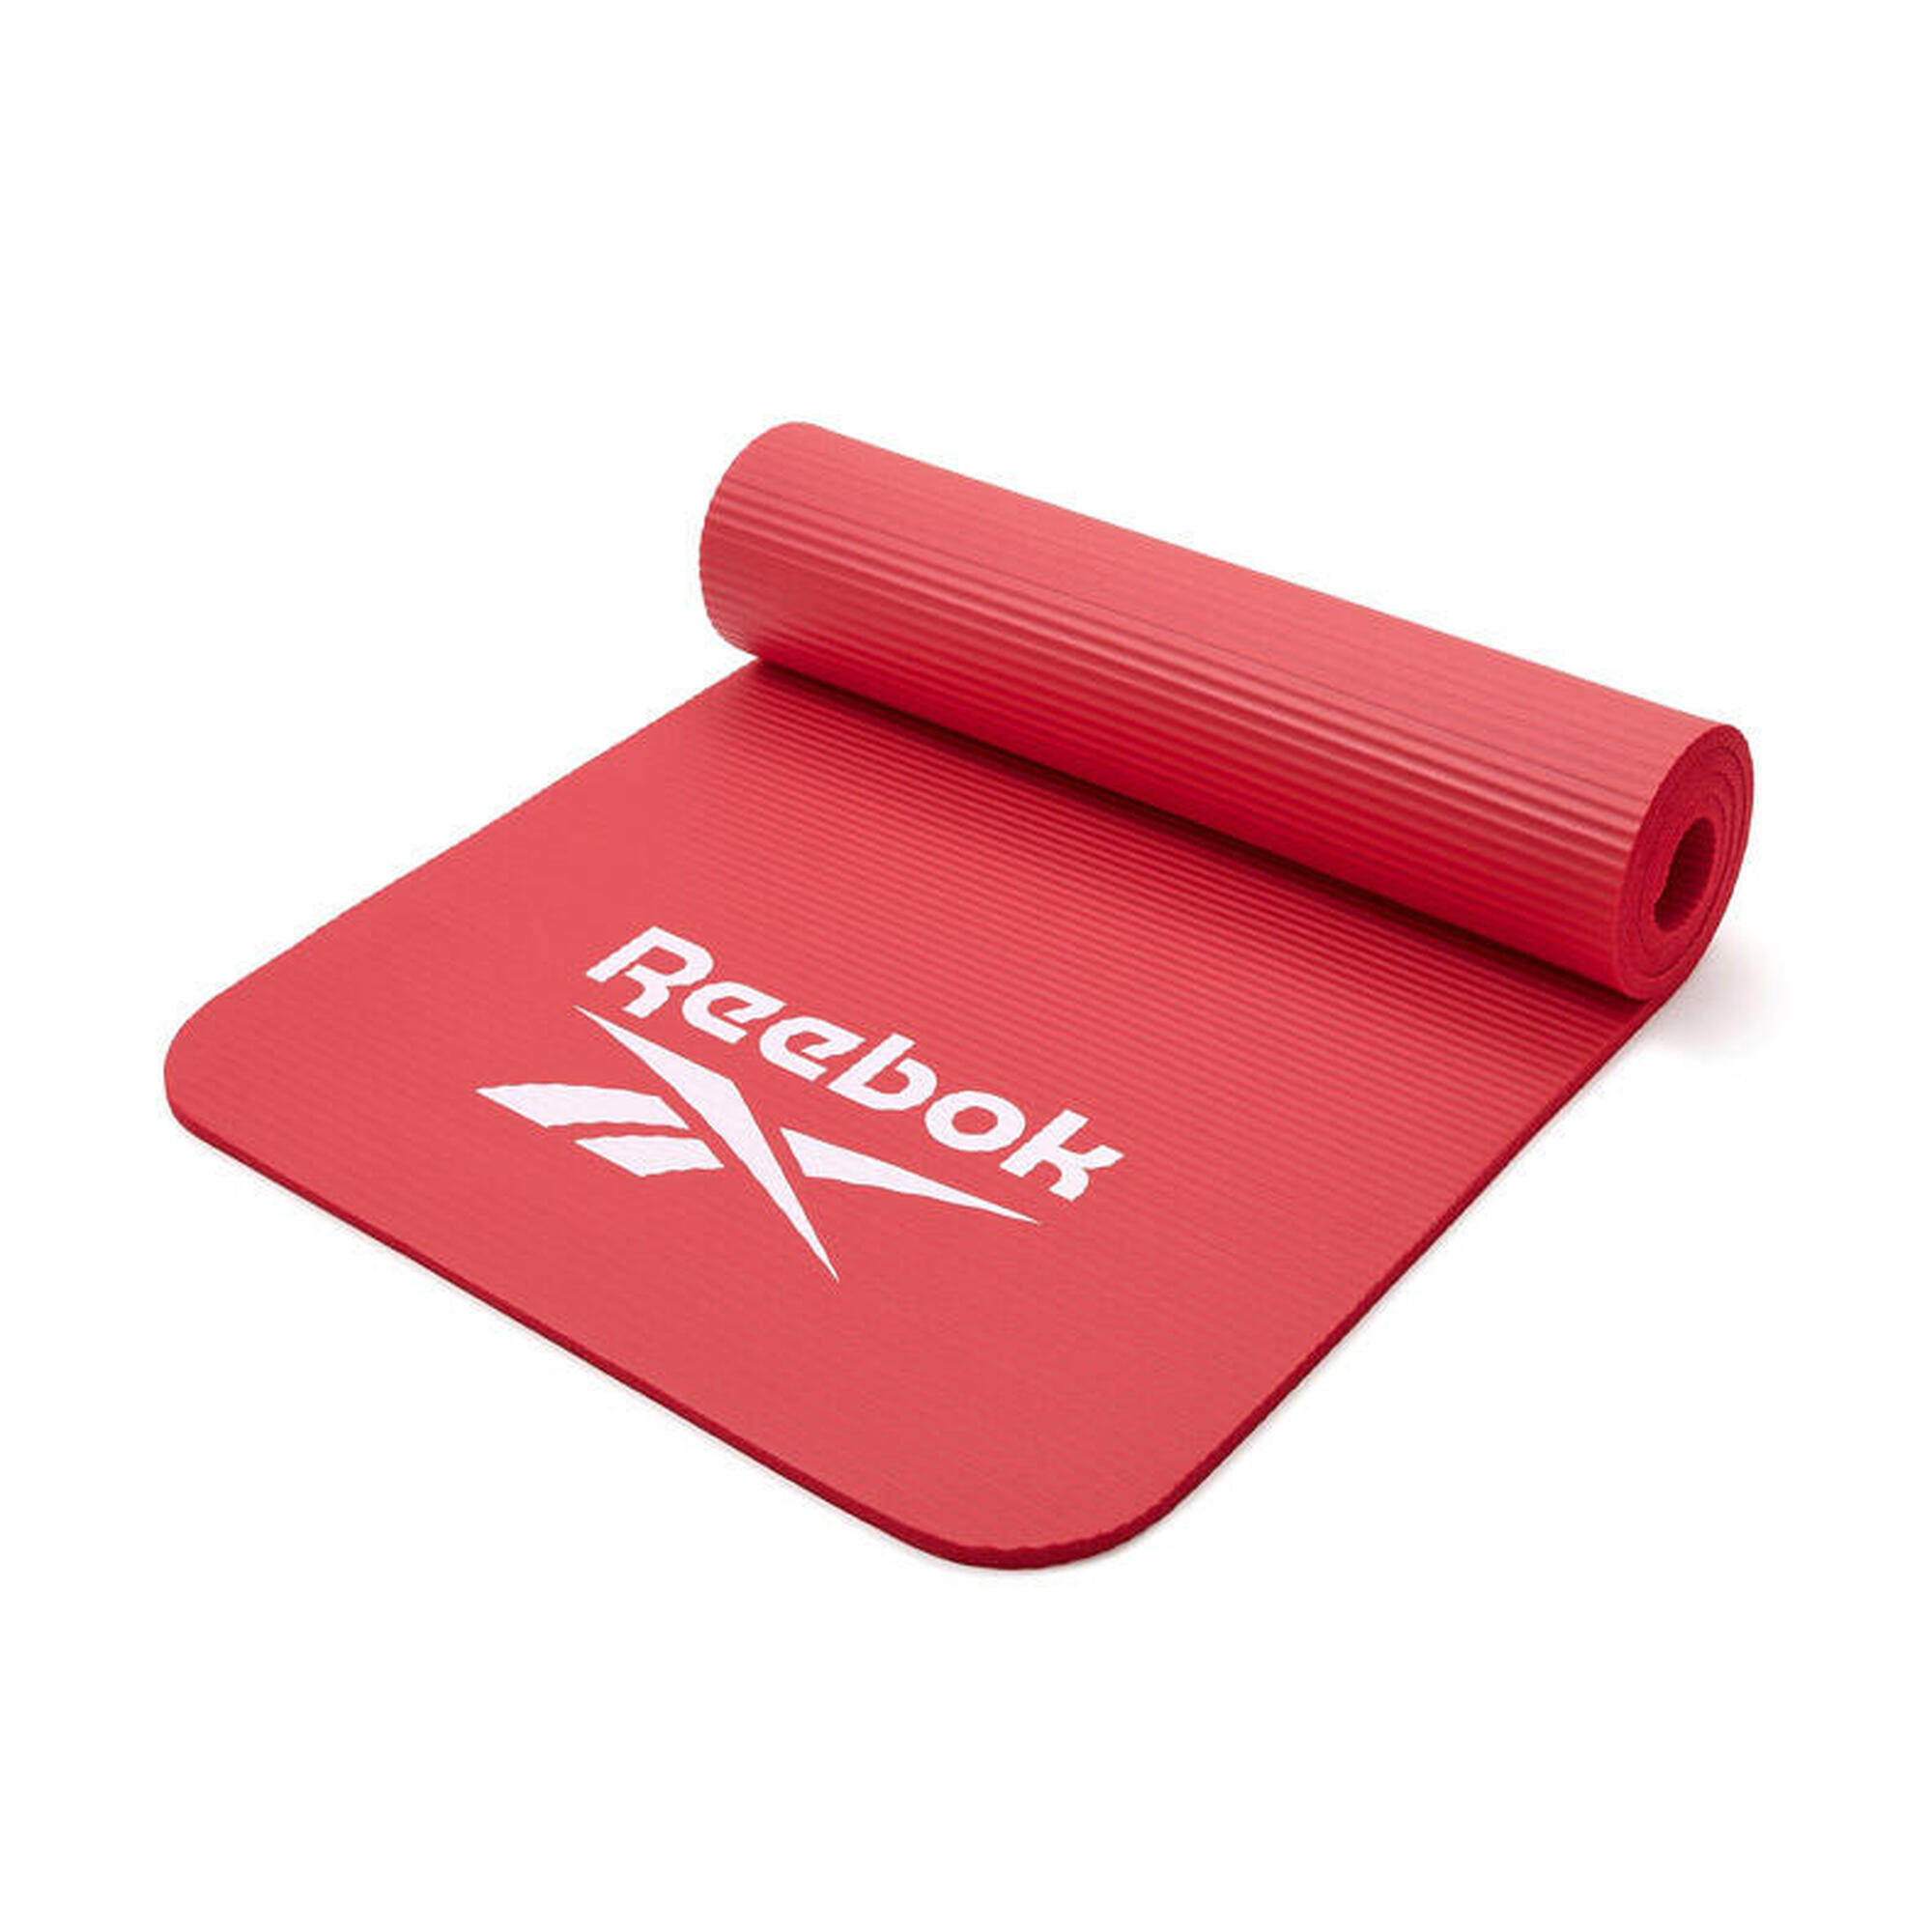 Reebok 10mm Training Yoga Mat with Strap 1/3